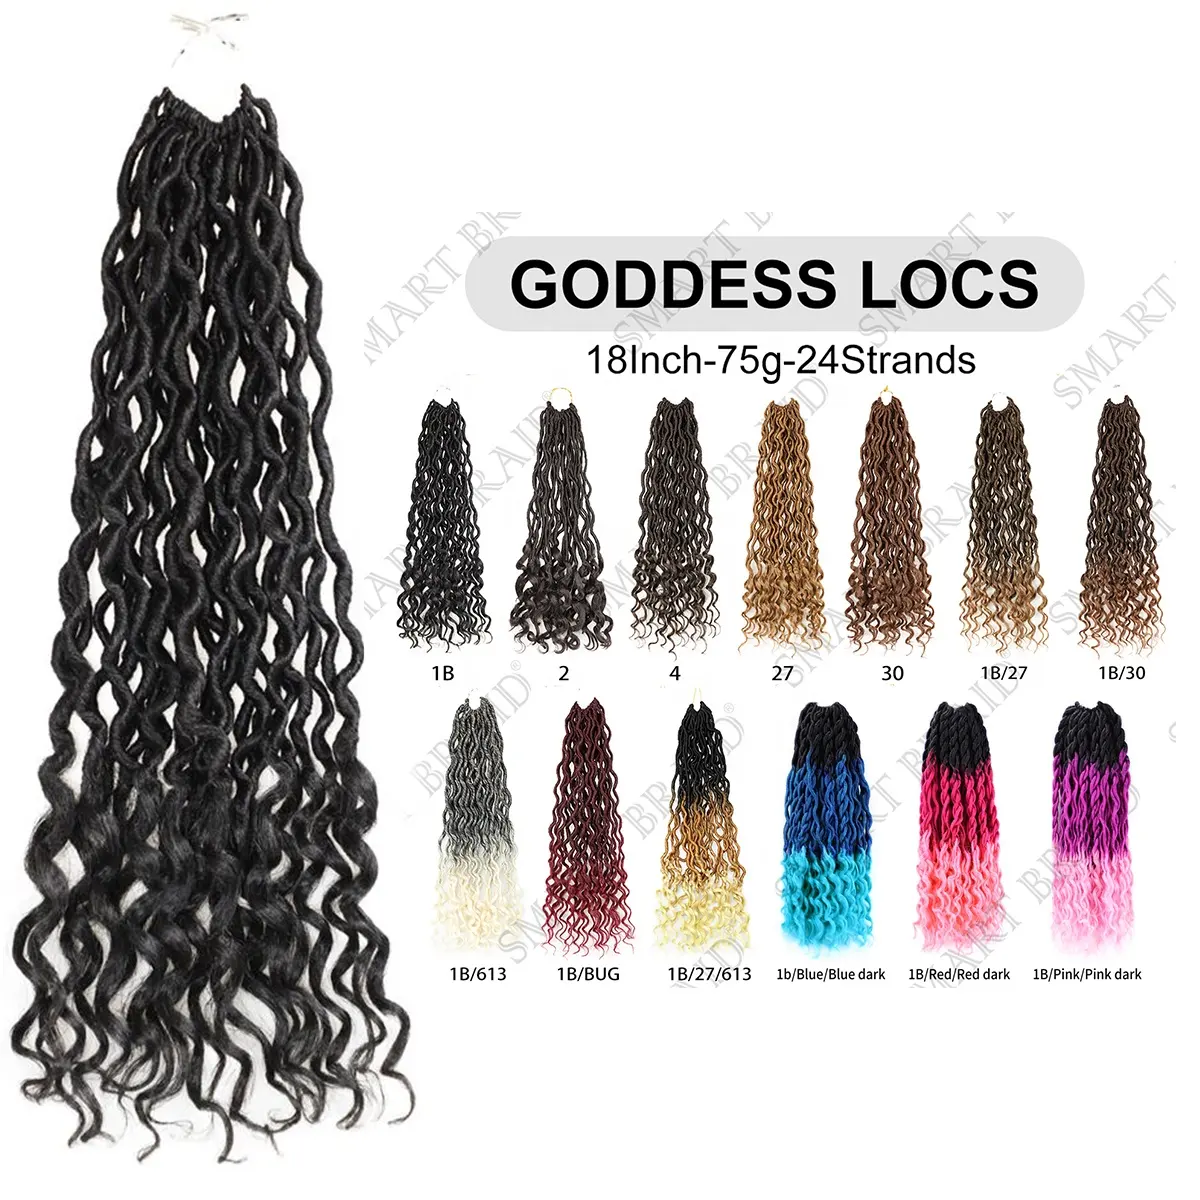 Wavy Goddess Locs Curly Crochet Braids Synthetic Crochet Braids Ombre Braiding Hair Faux Locks 16 inch